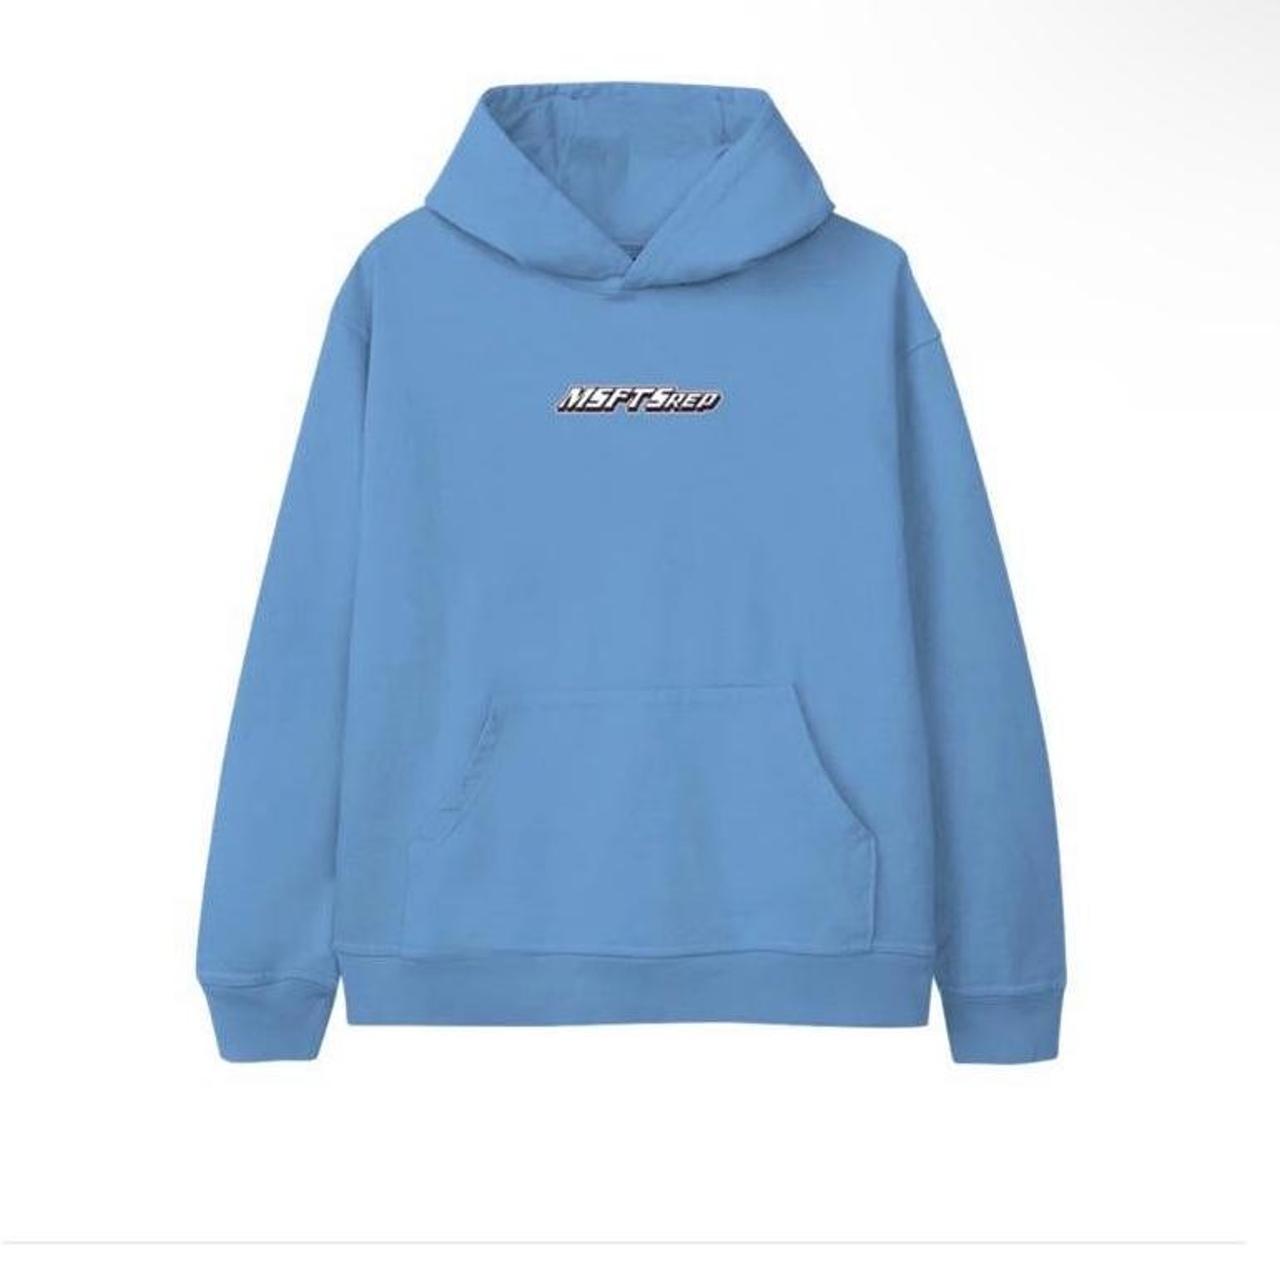 MSFTSrep jaden smith racer blue hoodie. size medium.... - Depop